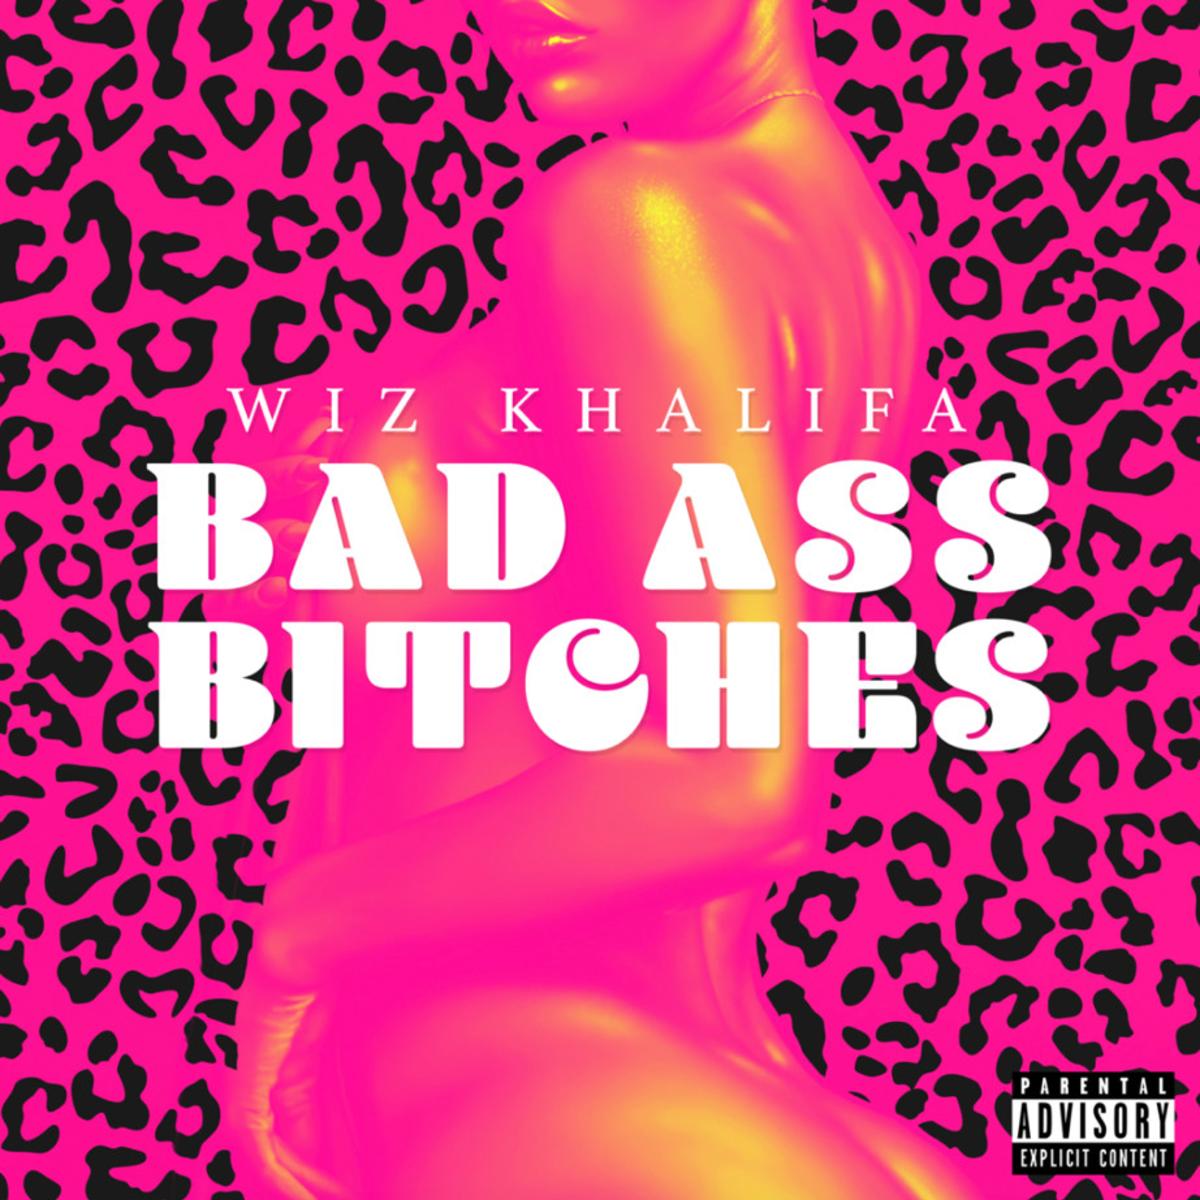 Wiz Khalifa – “Bad Ass Bitches” [Audio]